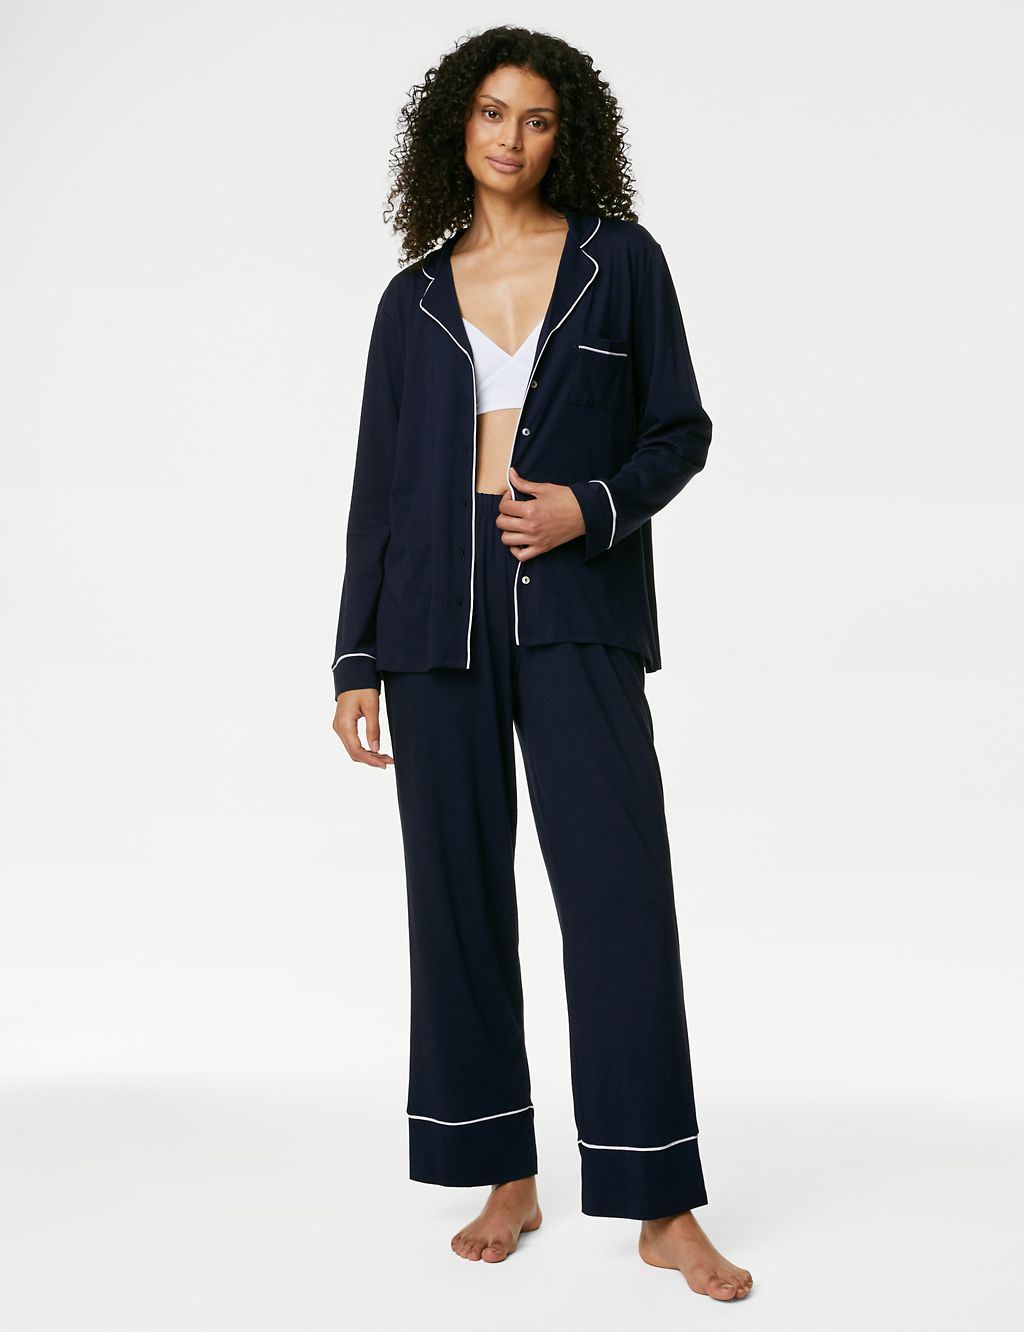 Cool Comfort TM Cotton Modal Pyjama Set, M&S Collection